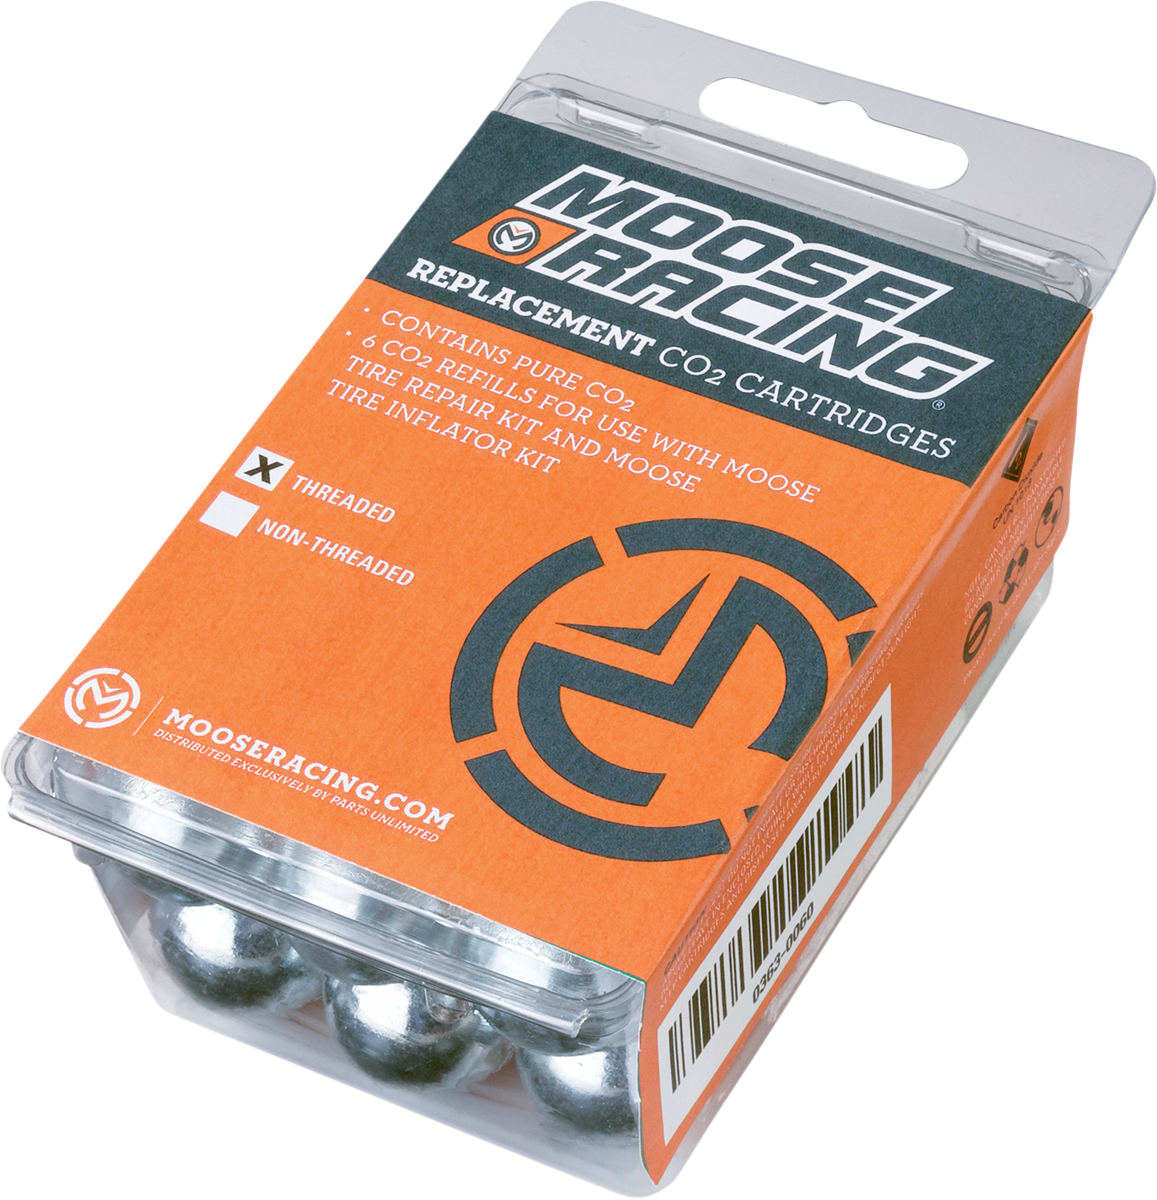 MOOSE RACING Cartridge - 16 Gauge Thread - CO2 0363-0060